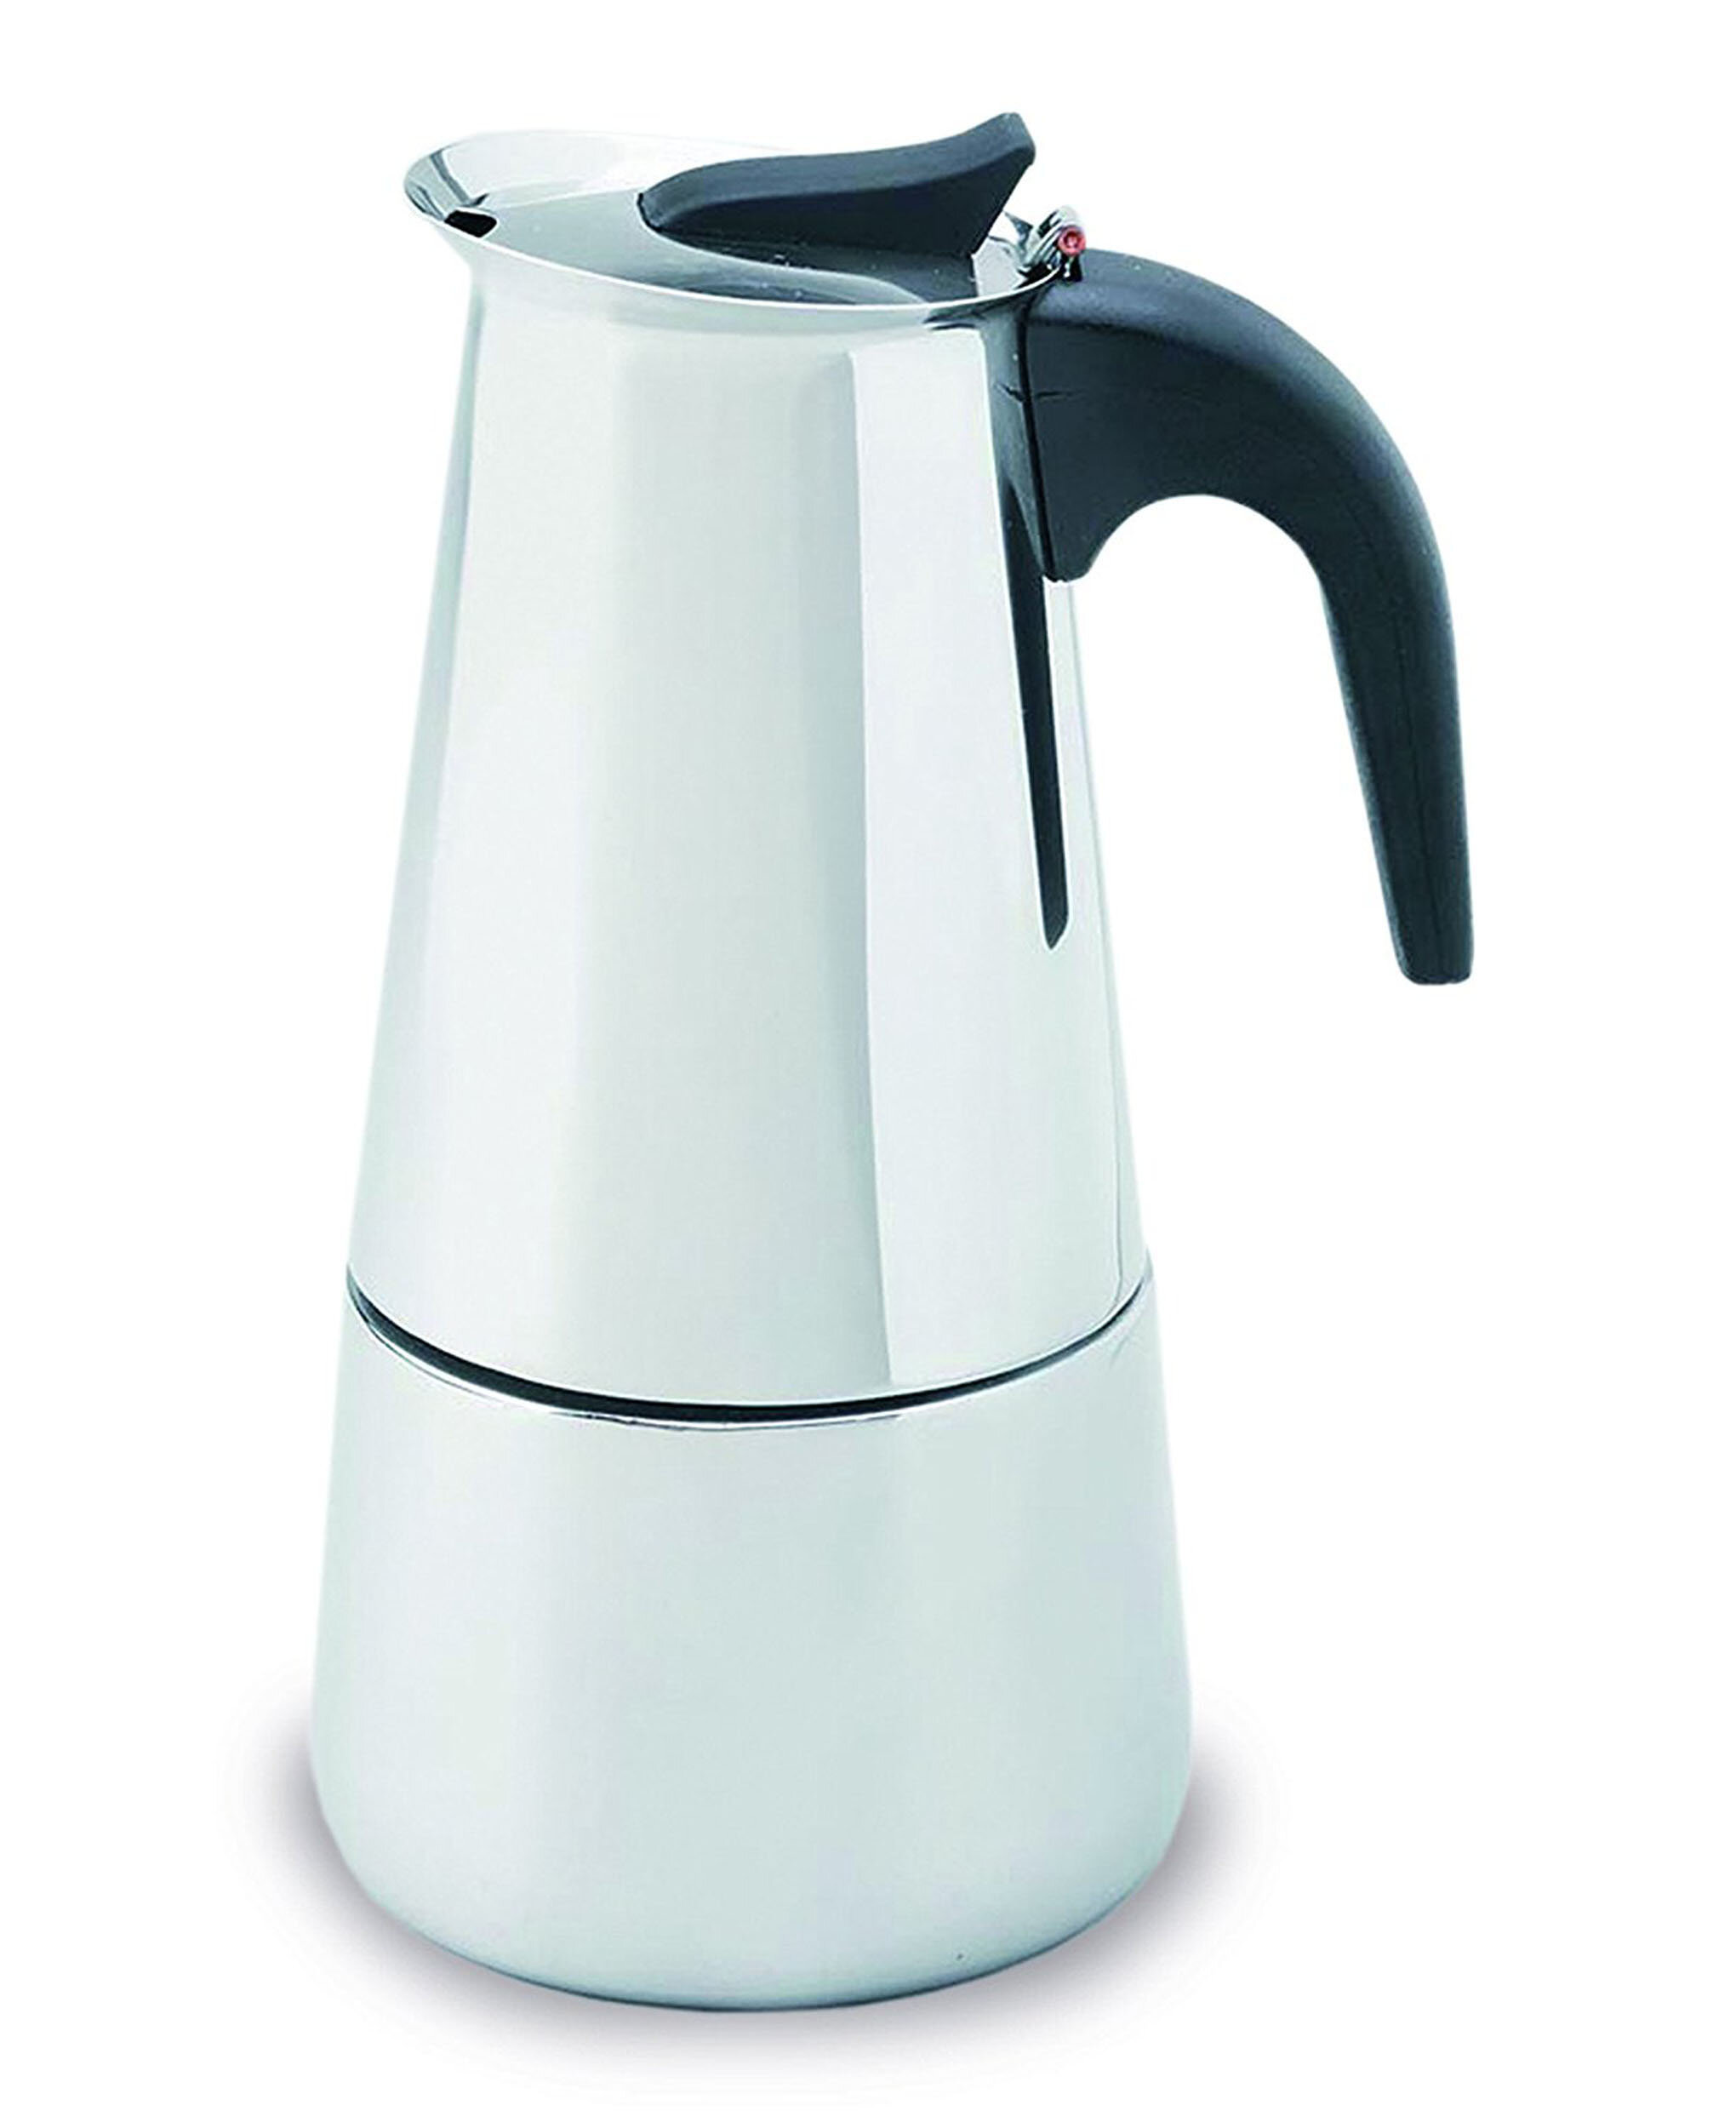 IMUSA Electric Espresso/Moka Maker Red - 6 Cup